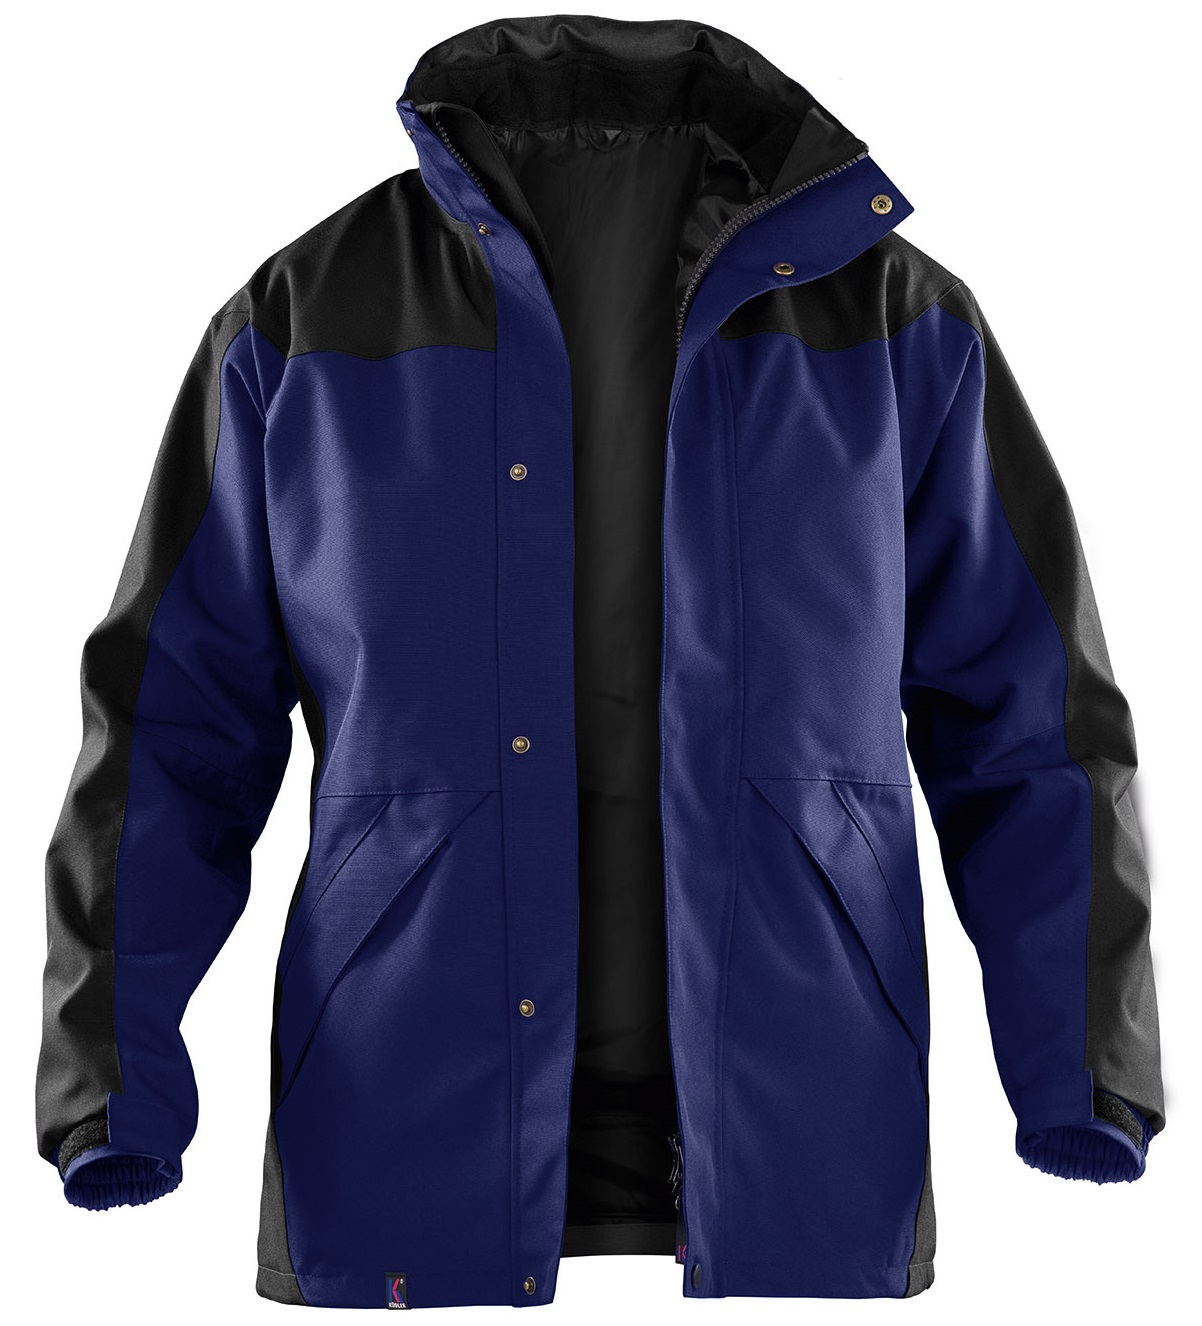 KÜBLER-Regenschutz, Doppel-Jacke, Wetter-Dress Regen-Nässe-Schutz, Inno Plus, marine/schwarz